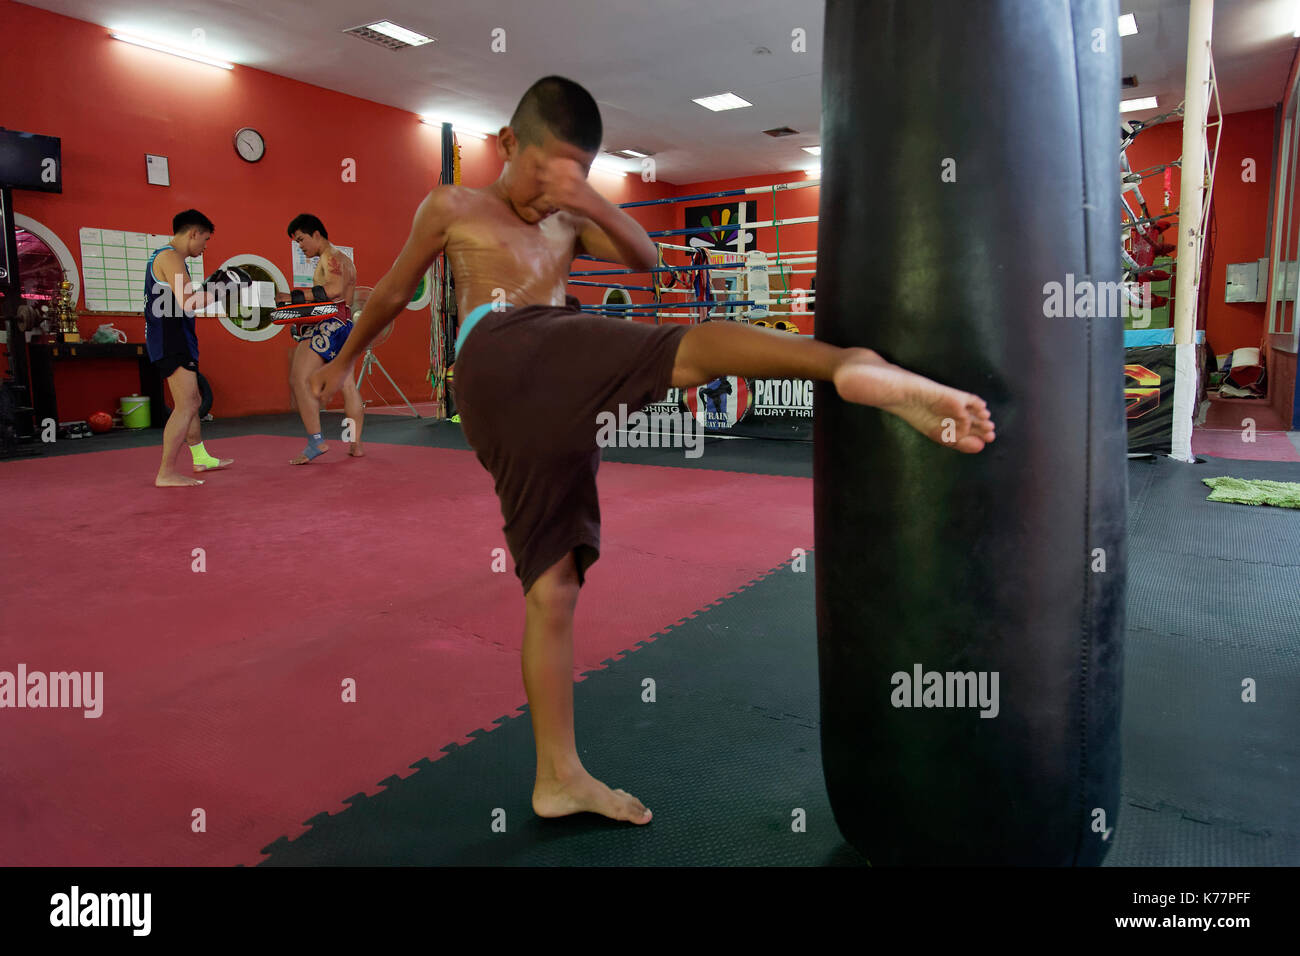 Muay thai gym in Thailand Stock Photo: 159367251 - Alamy